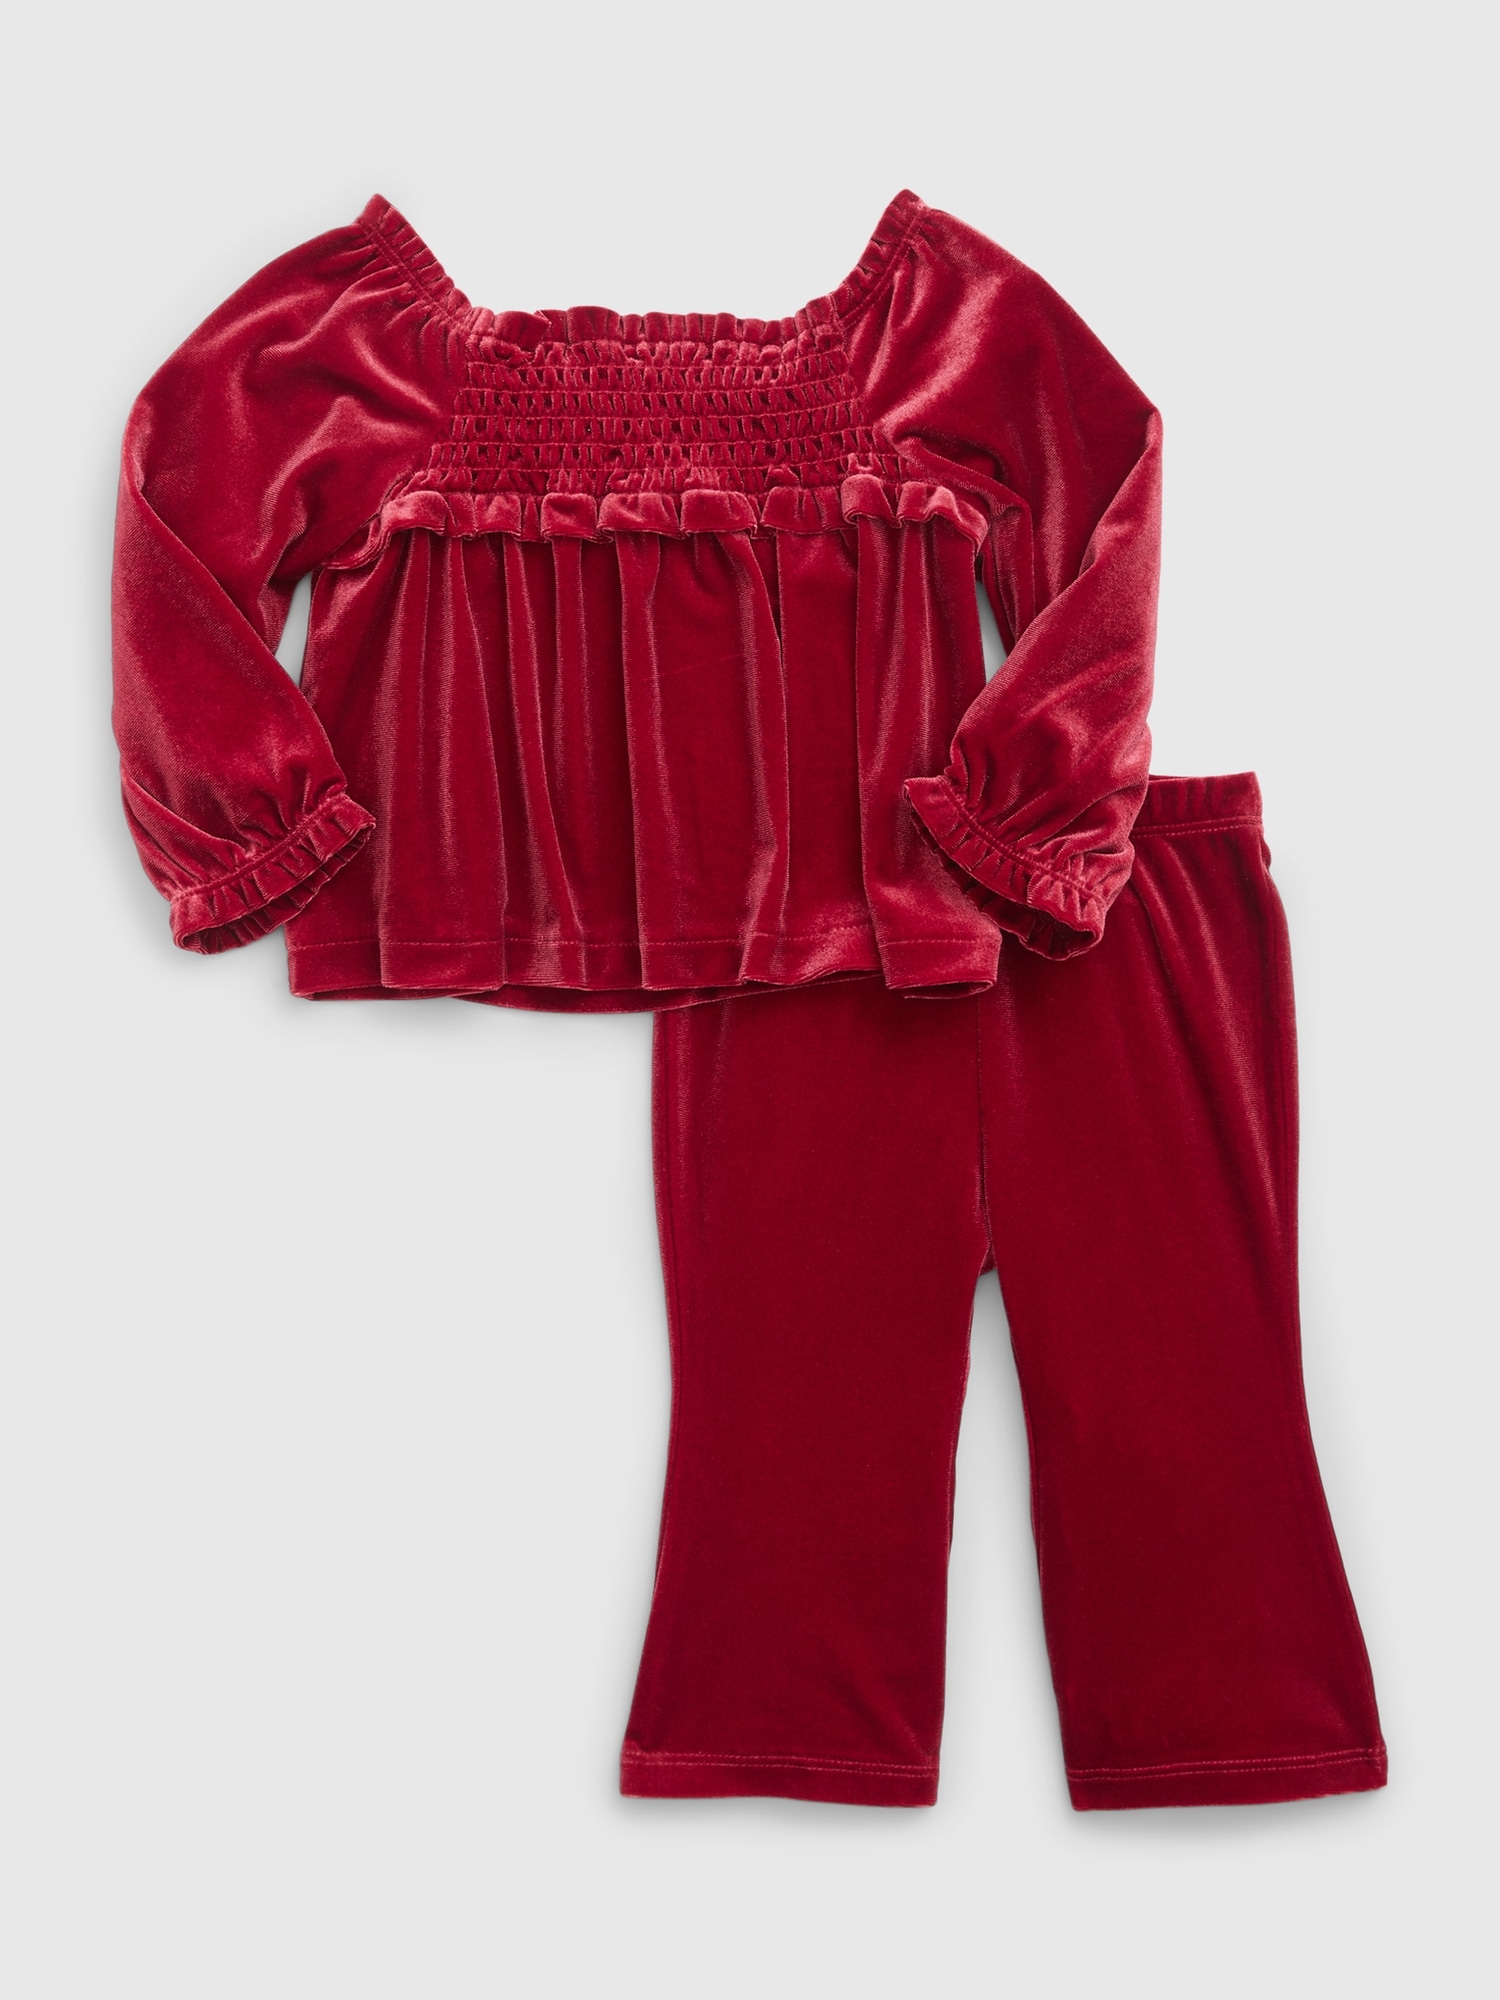 Baby Velvet Smocked Outfit Set | Gap